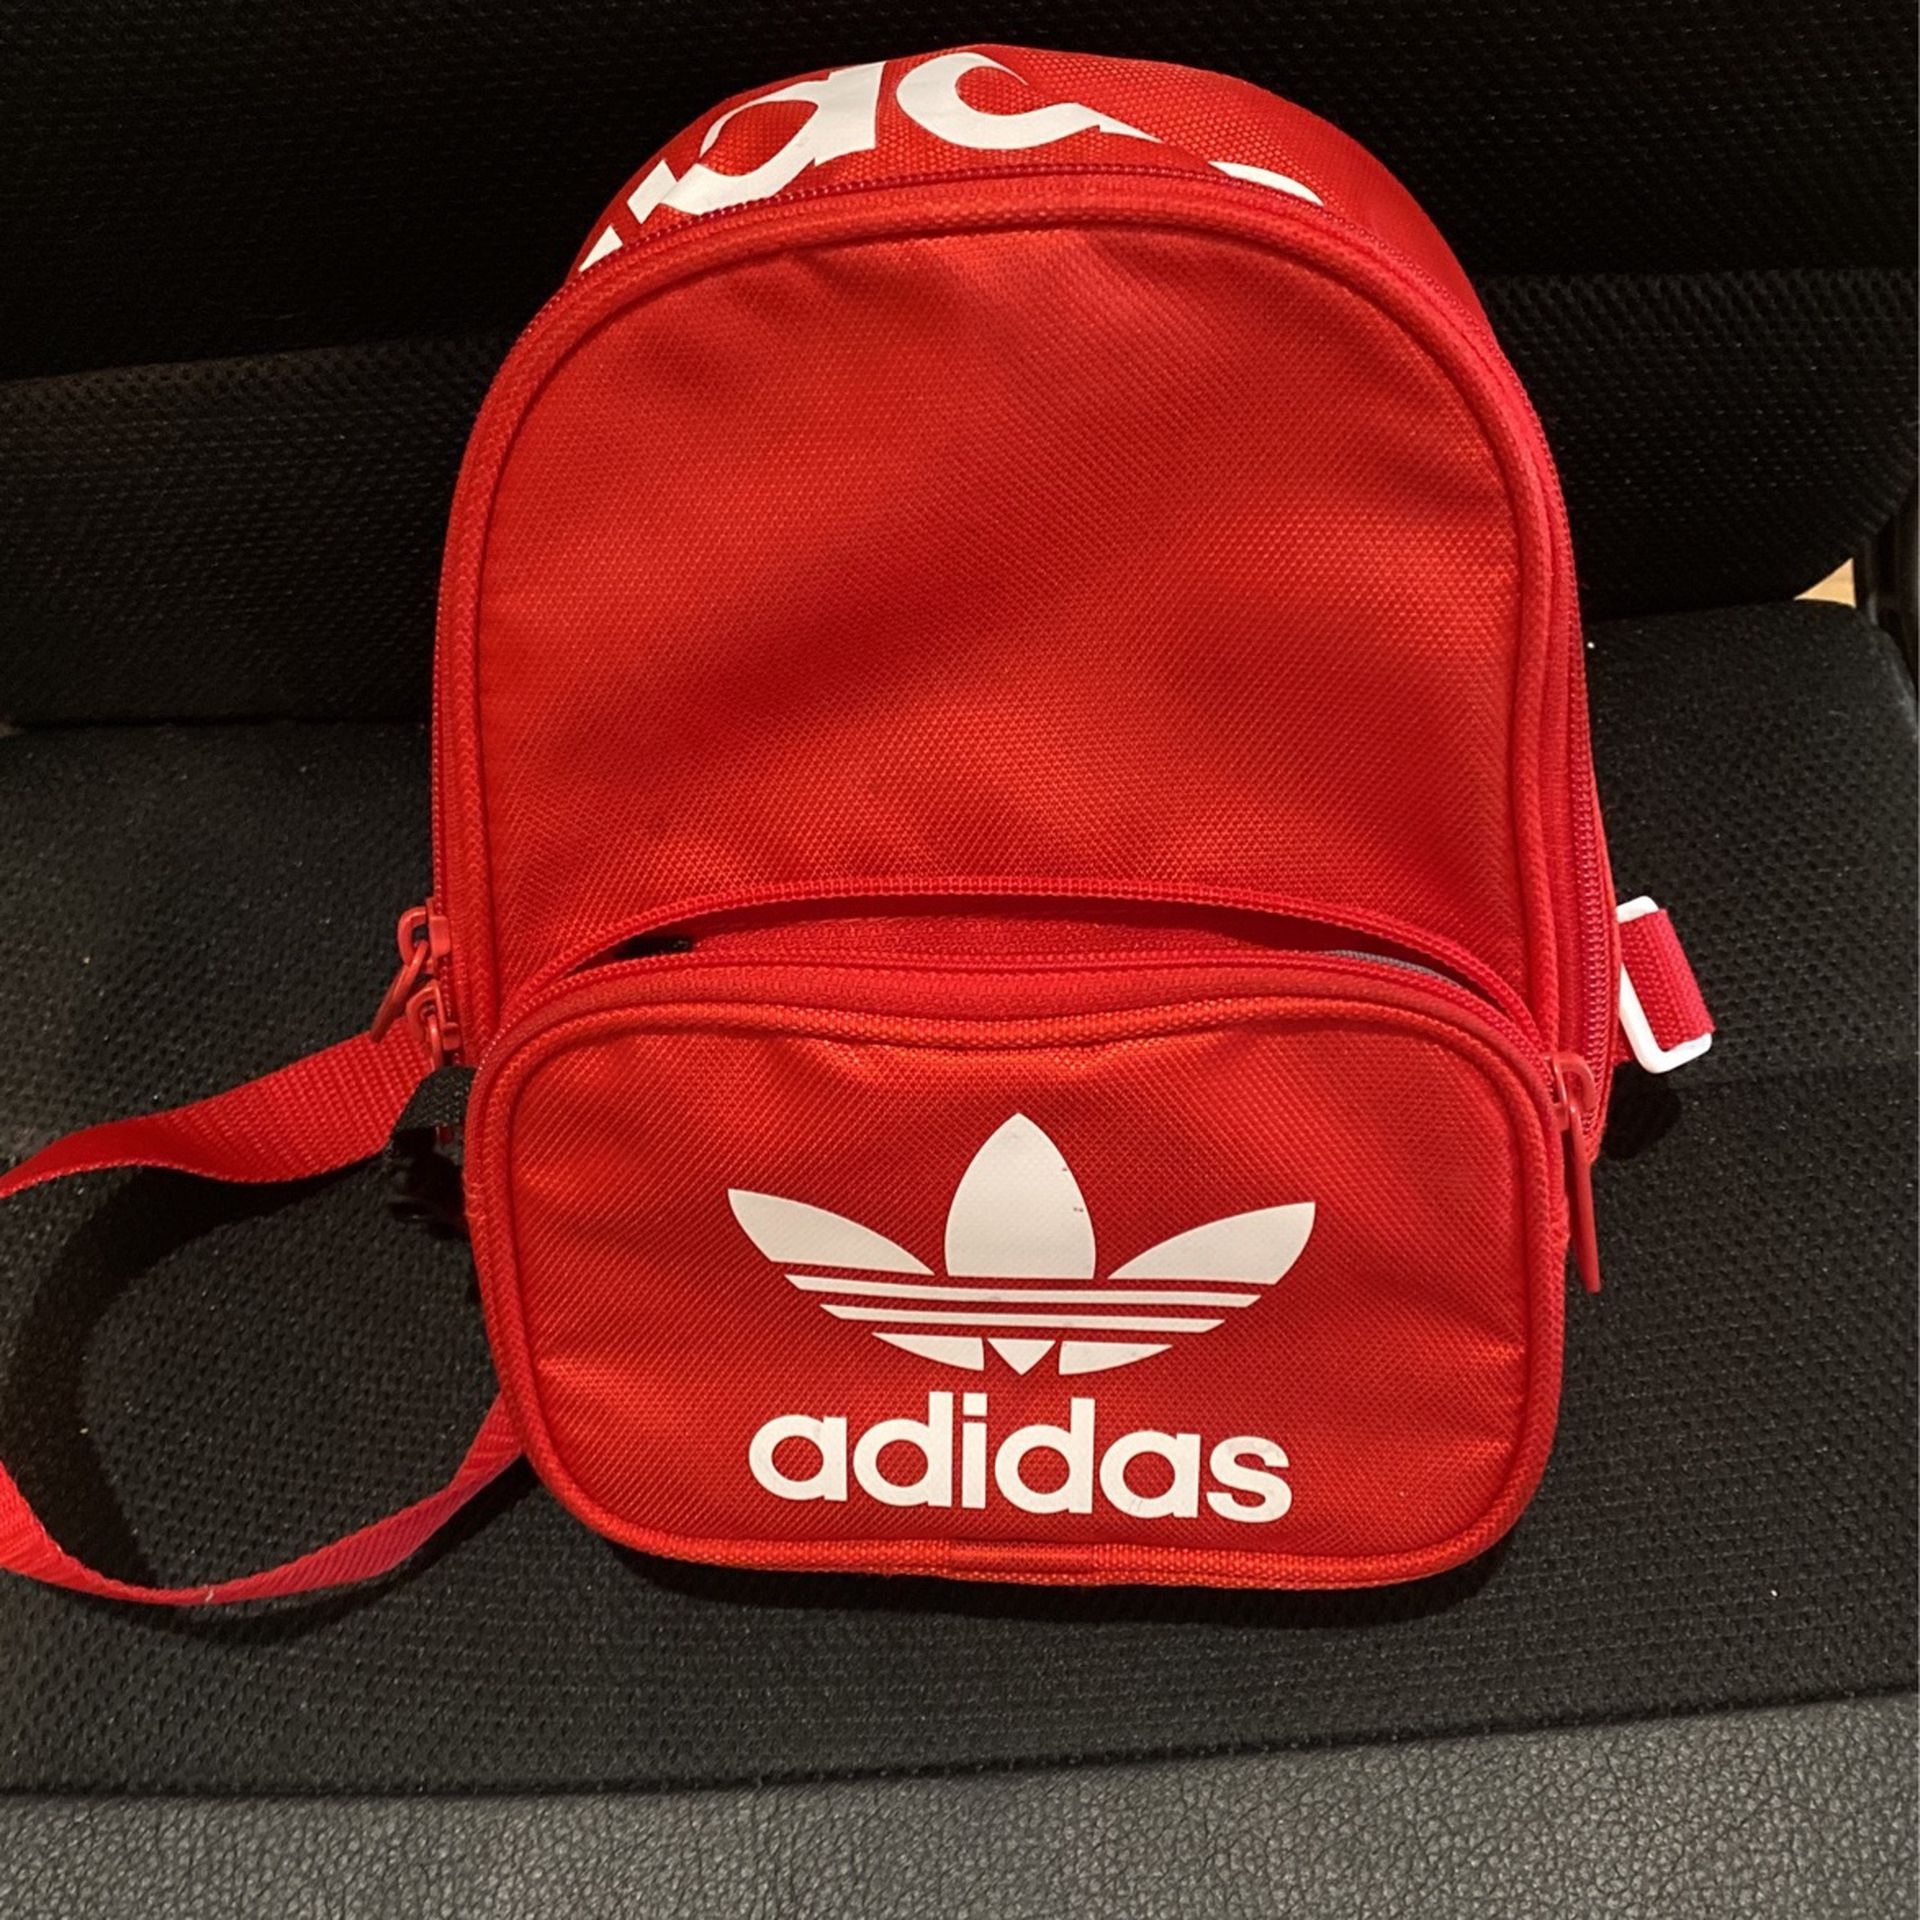 Mini Backpack Adidas